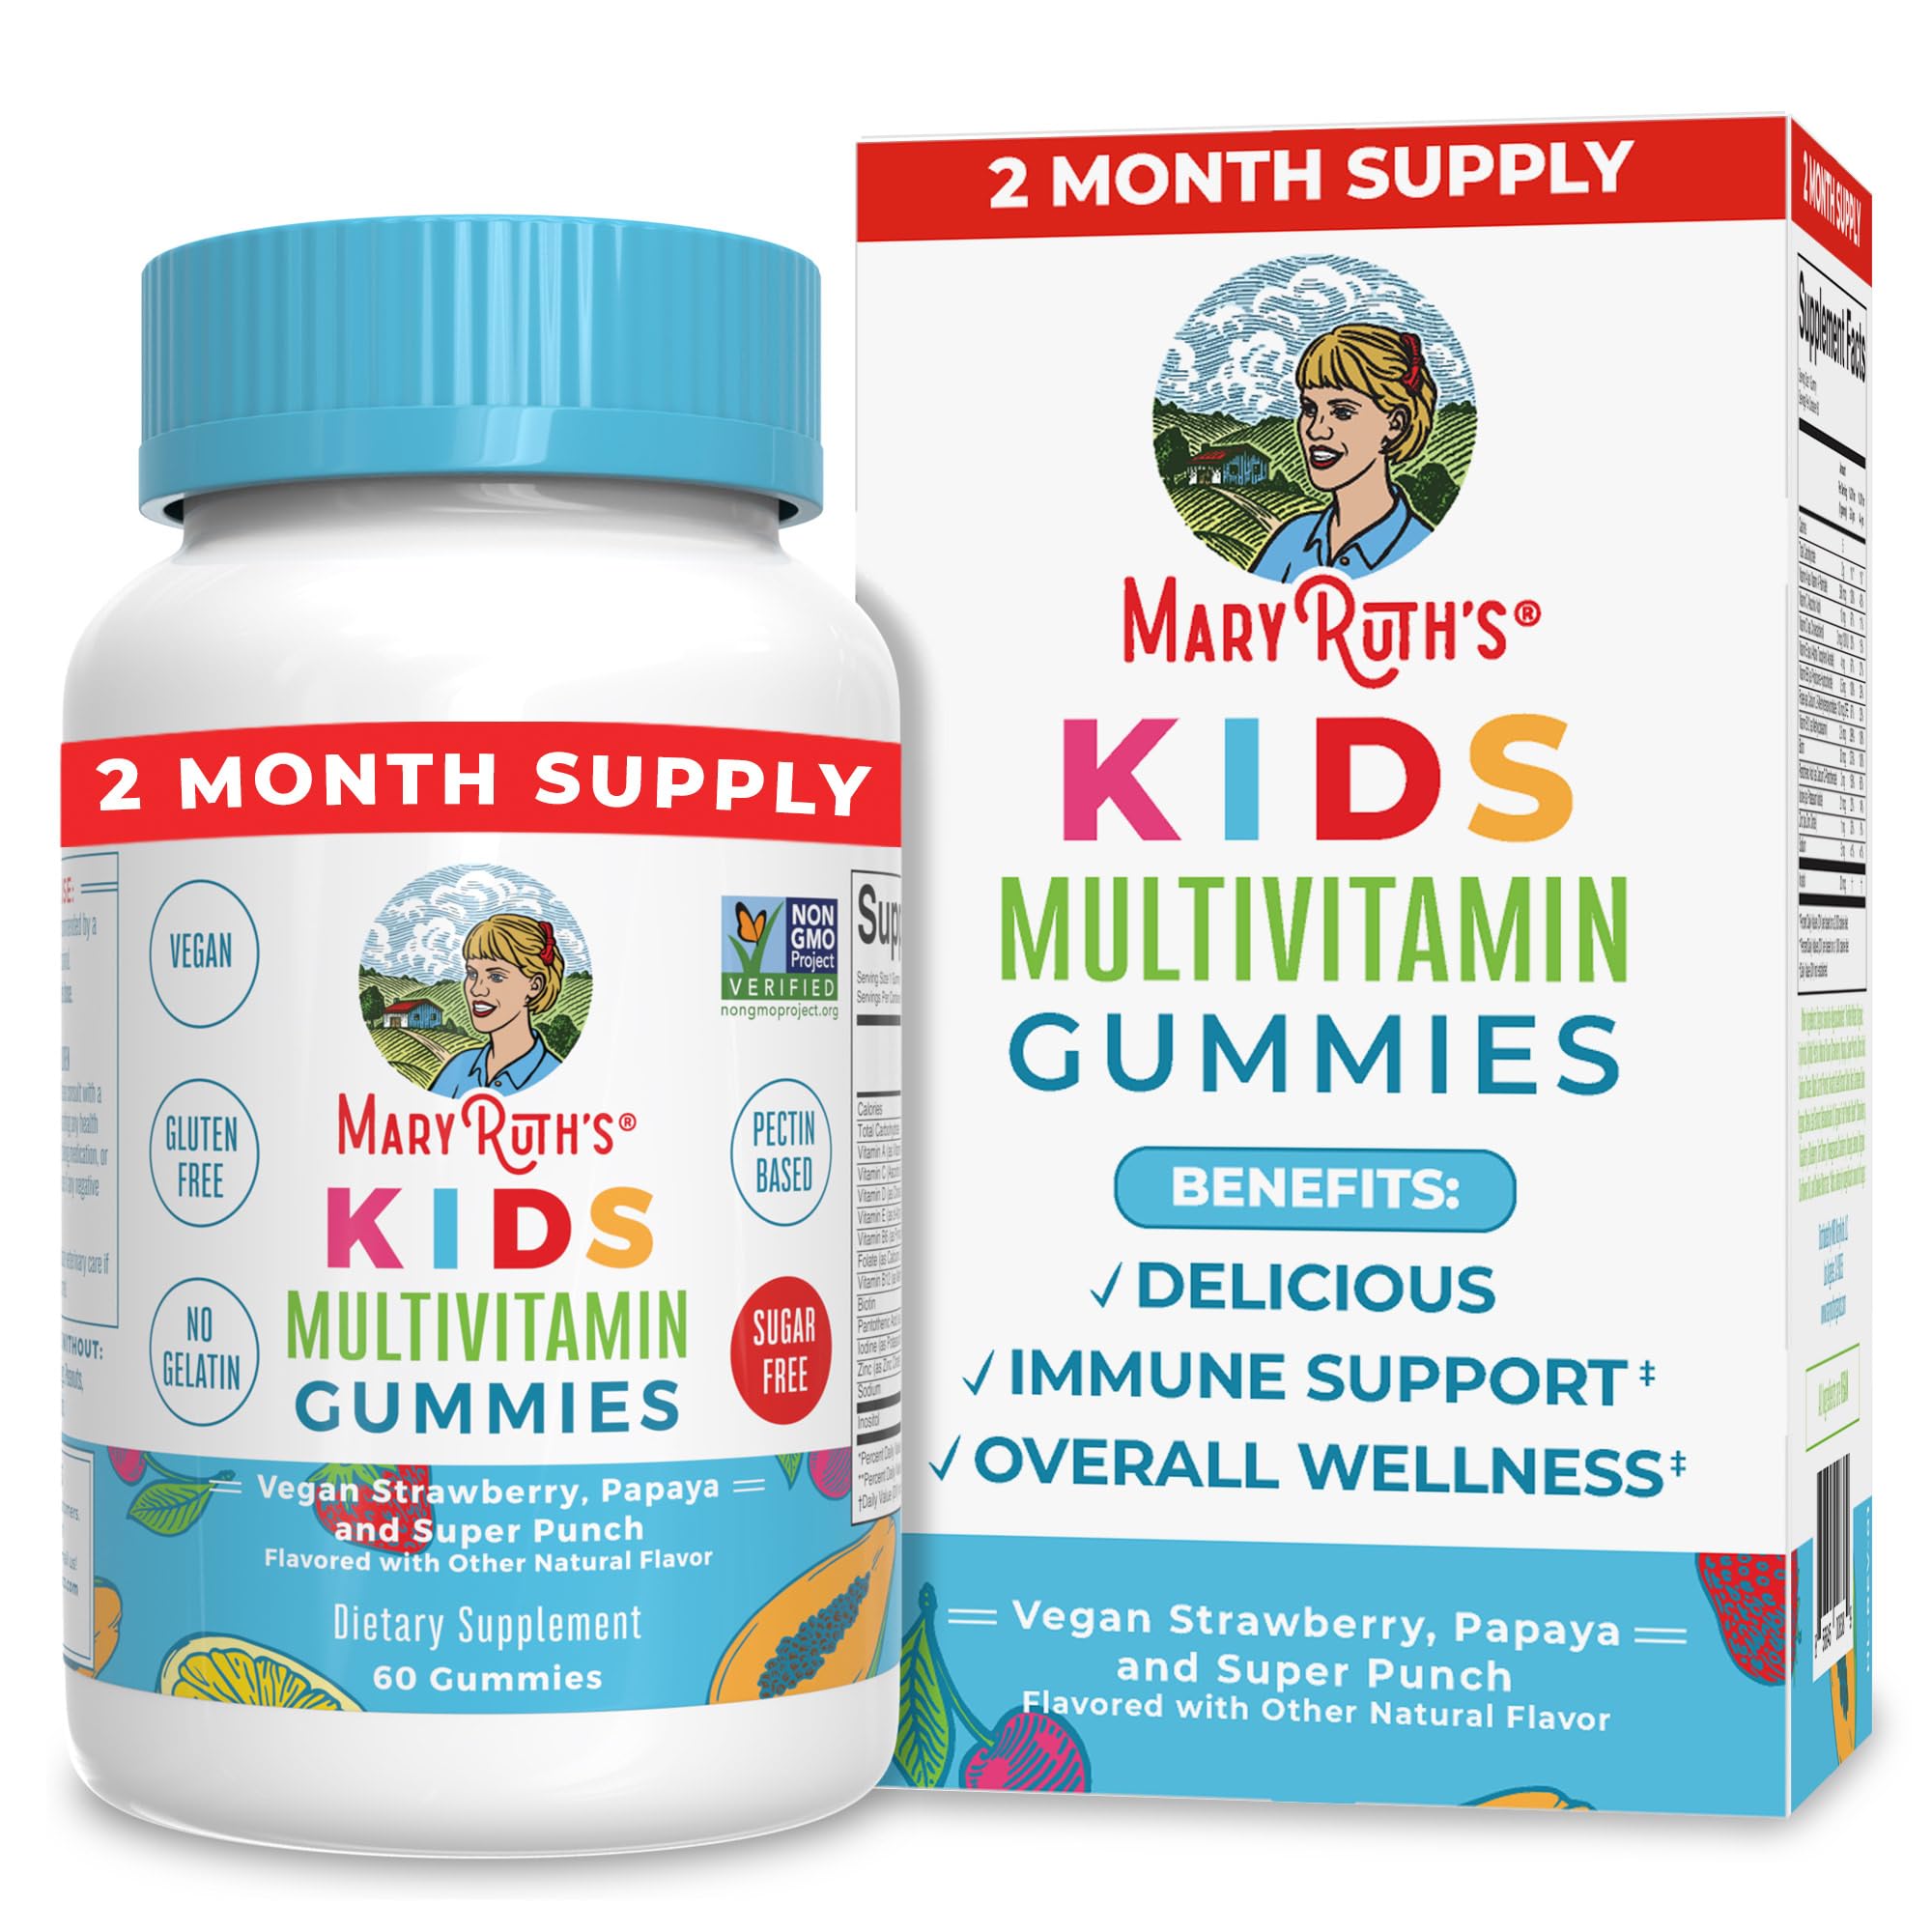 MaryRuth's Kids Multivitamin Gummies, Kids Probiotic Gummies, and Kids Immunity Beans, 3-Pack Bundle for Immune Support, Bone Health, Digestive Health, Gut Health, and Overall Health, Vegan & Non-GMO